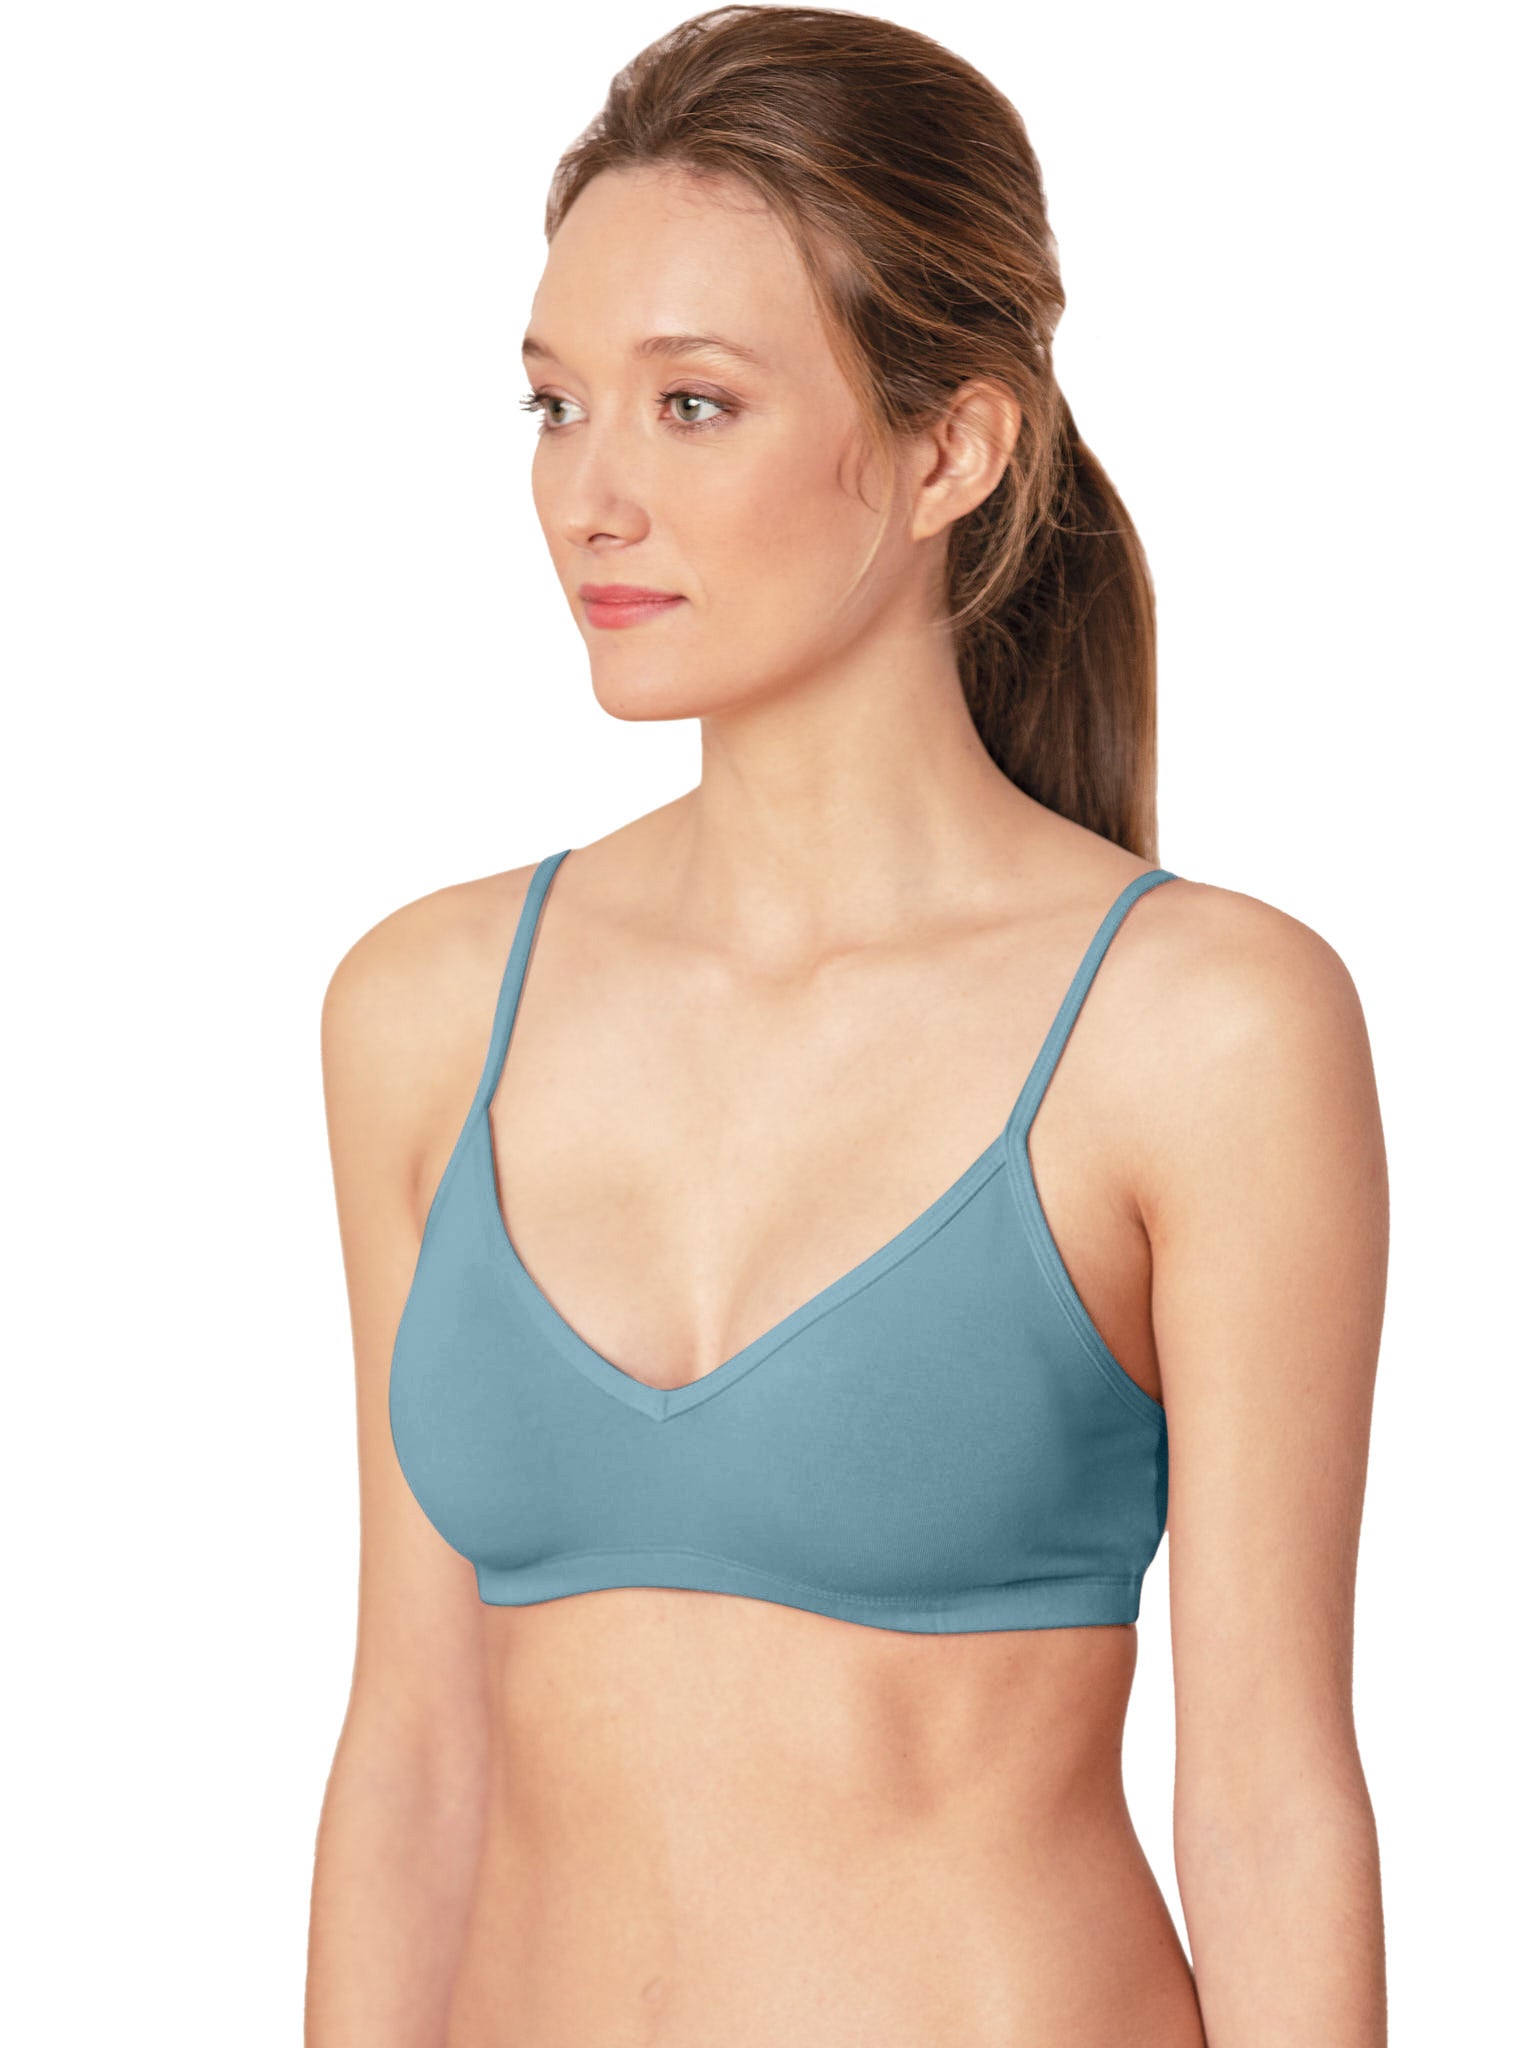 Wholesale 31 c bra size For Supportive Underwear 